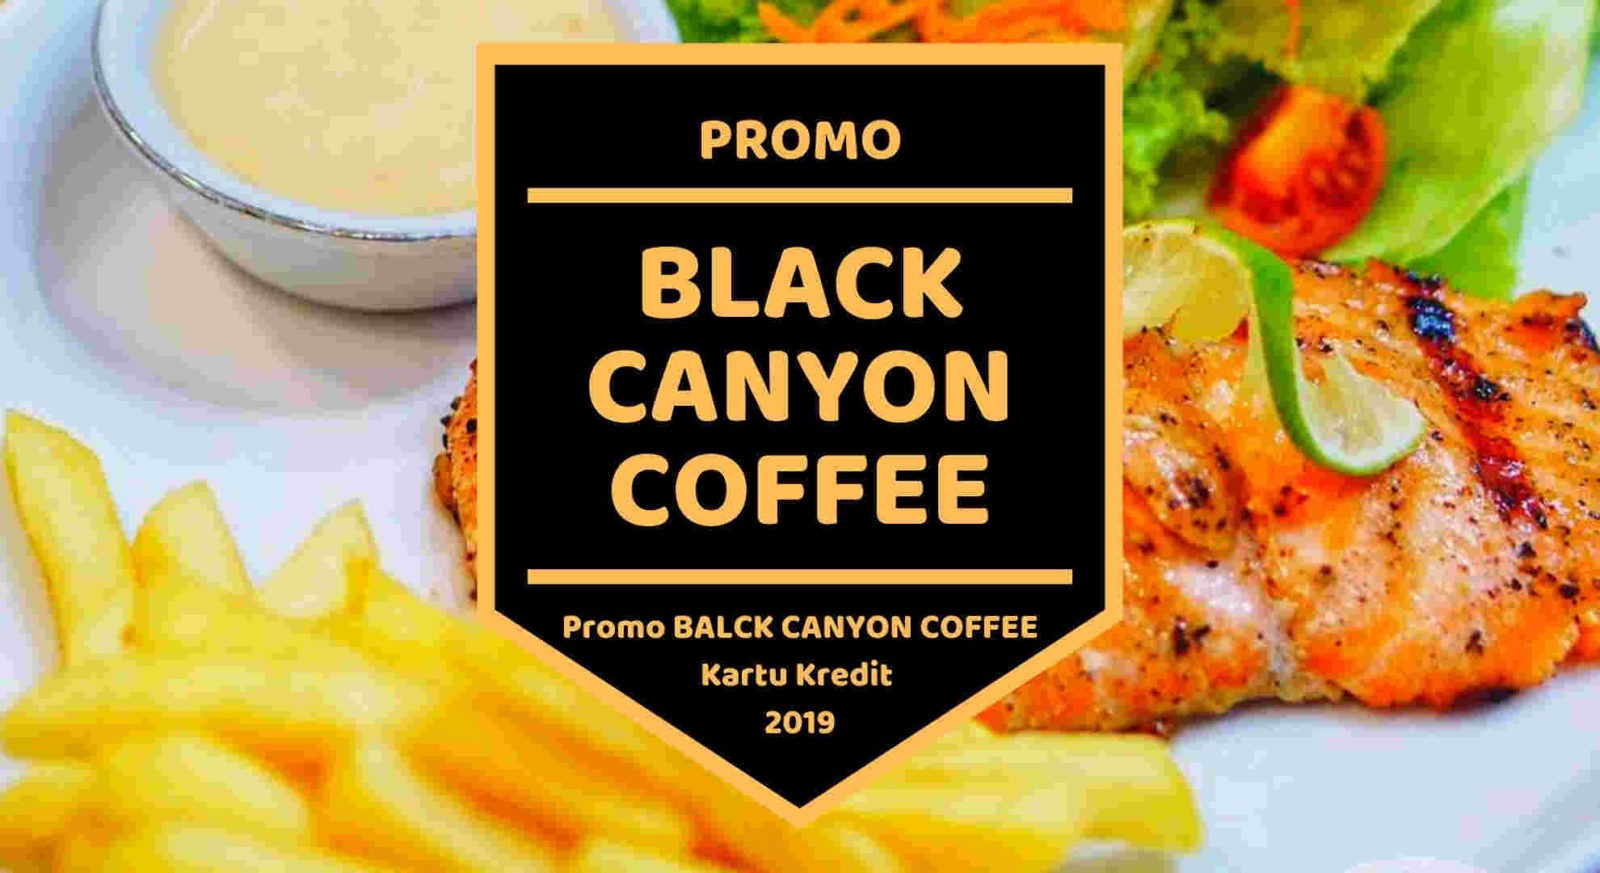 Promo Black Canyon Coffee